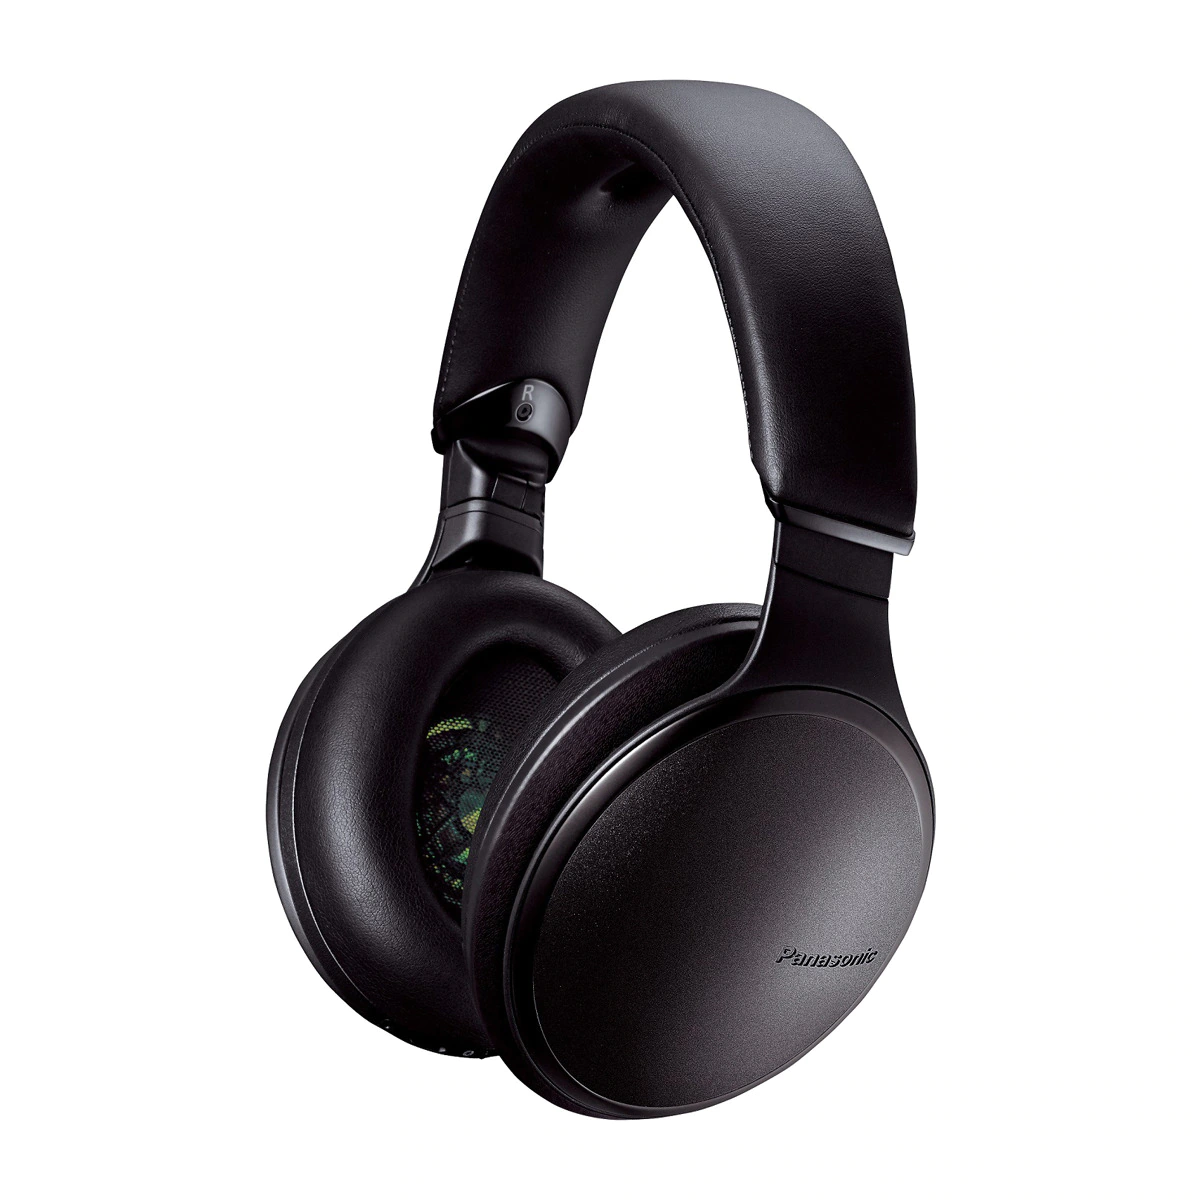 Auriculares de diadema Panasonic RP-HD605NE Negro Hi-Res con Bluetooth y Noise Cancelling con micrófono